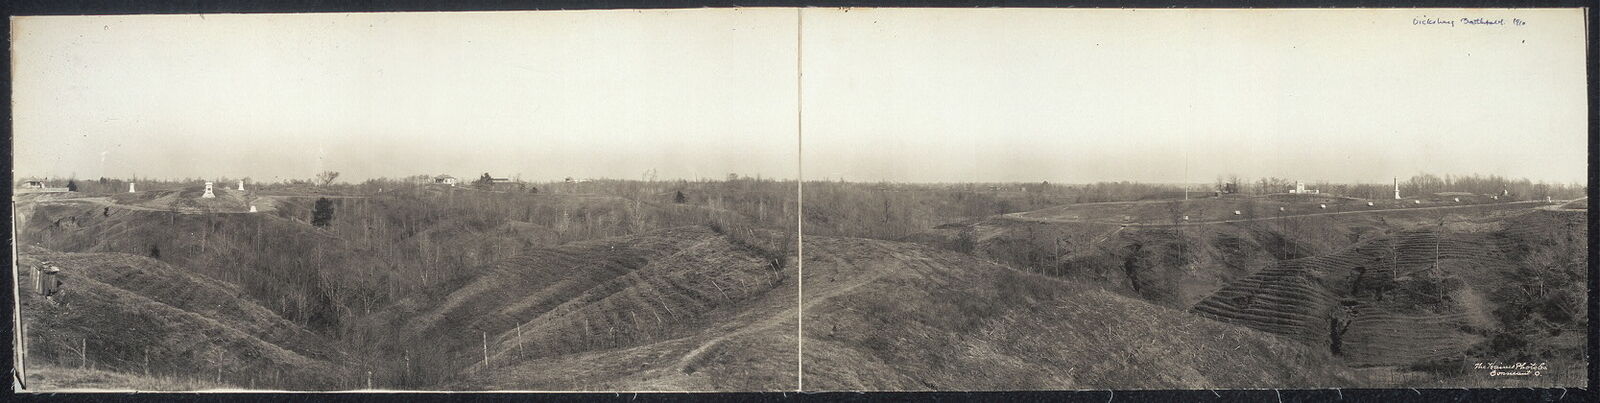 Photo:1910 Panoram no. 4,battlefield,Vicksburg,Mississippi